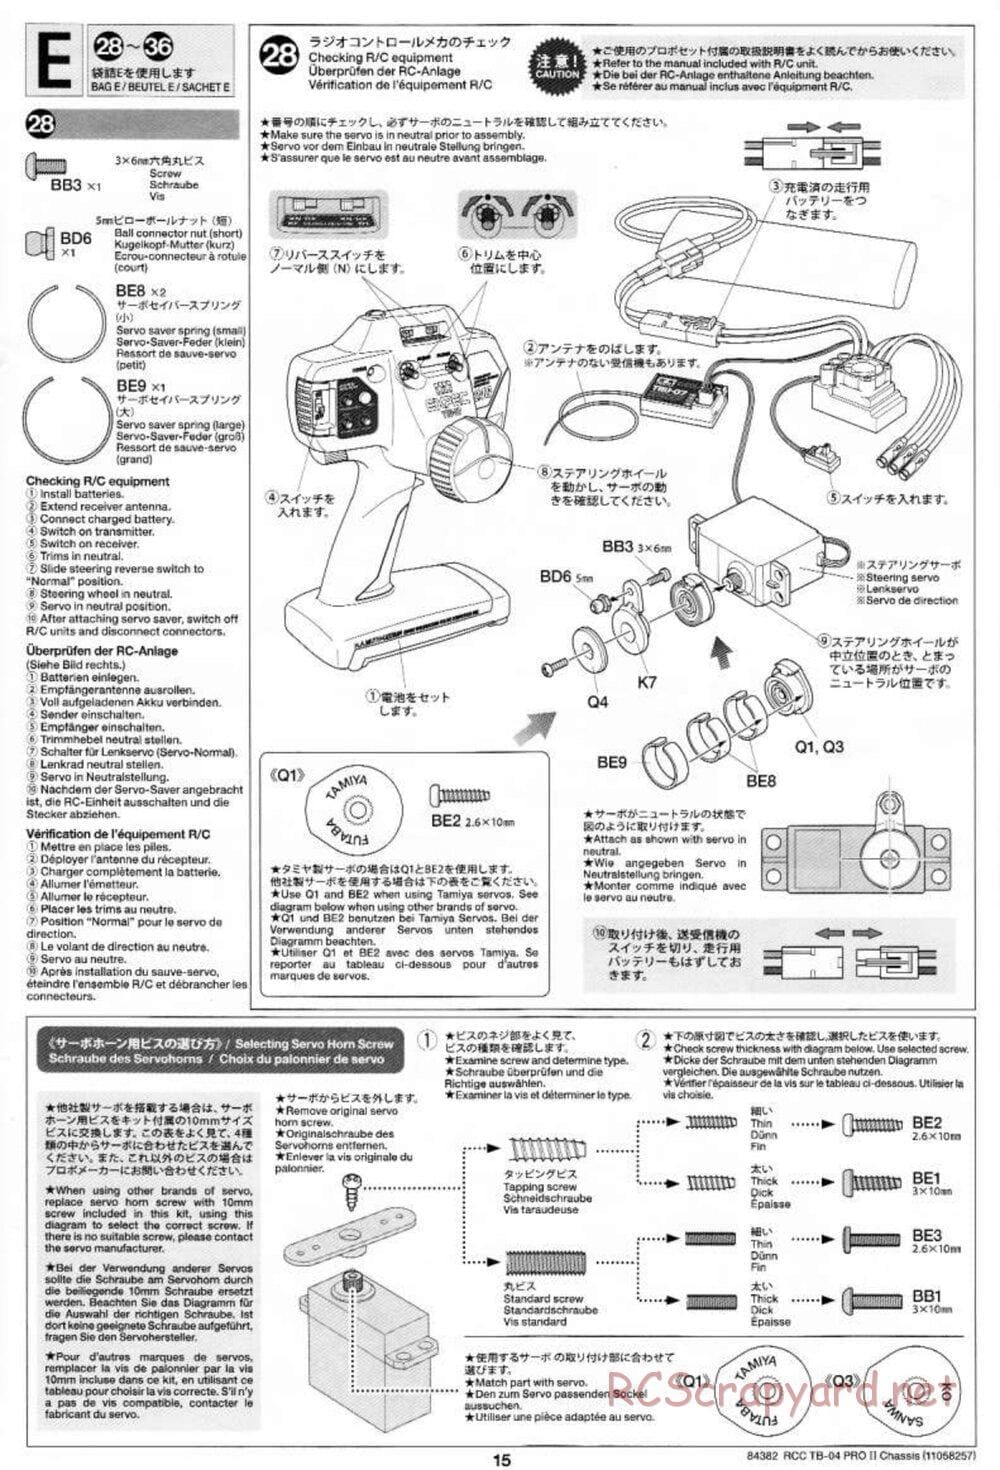 Tamiya - TB-04 Pro II Chassis - Manual - Page 15